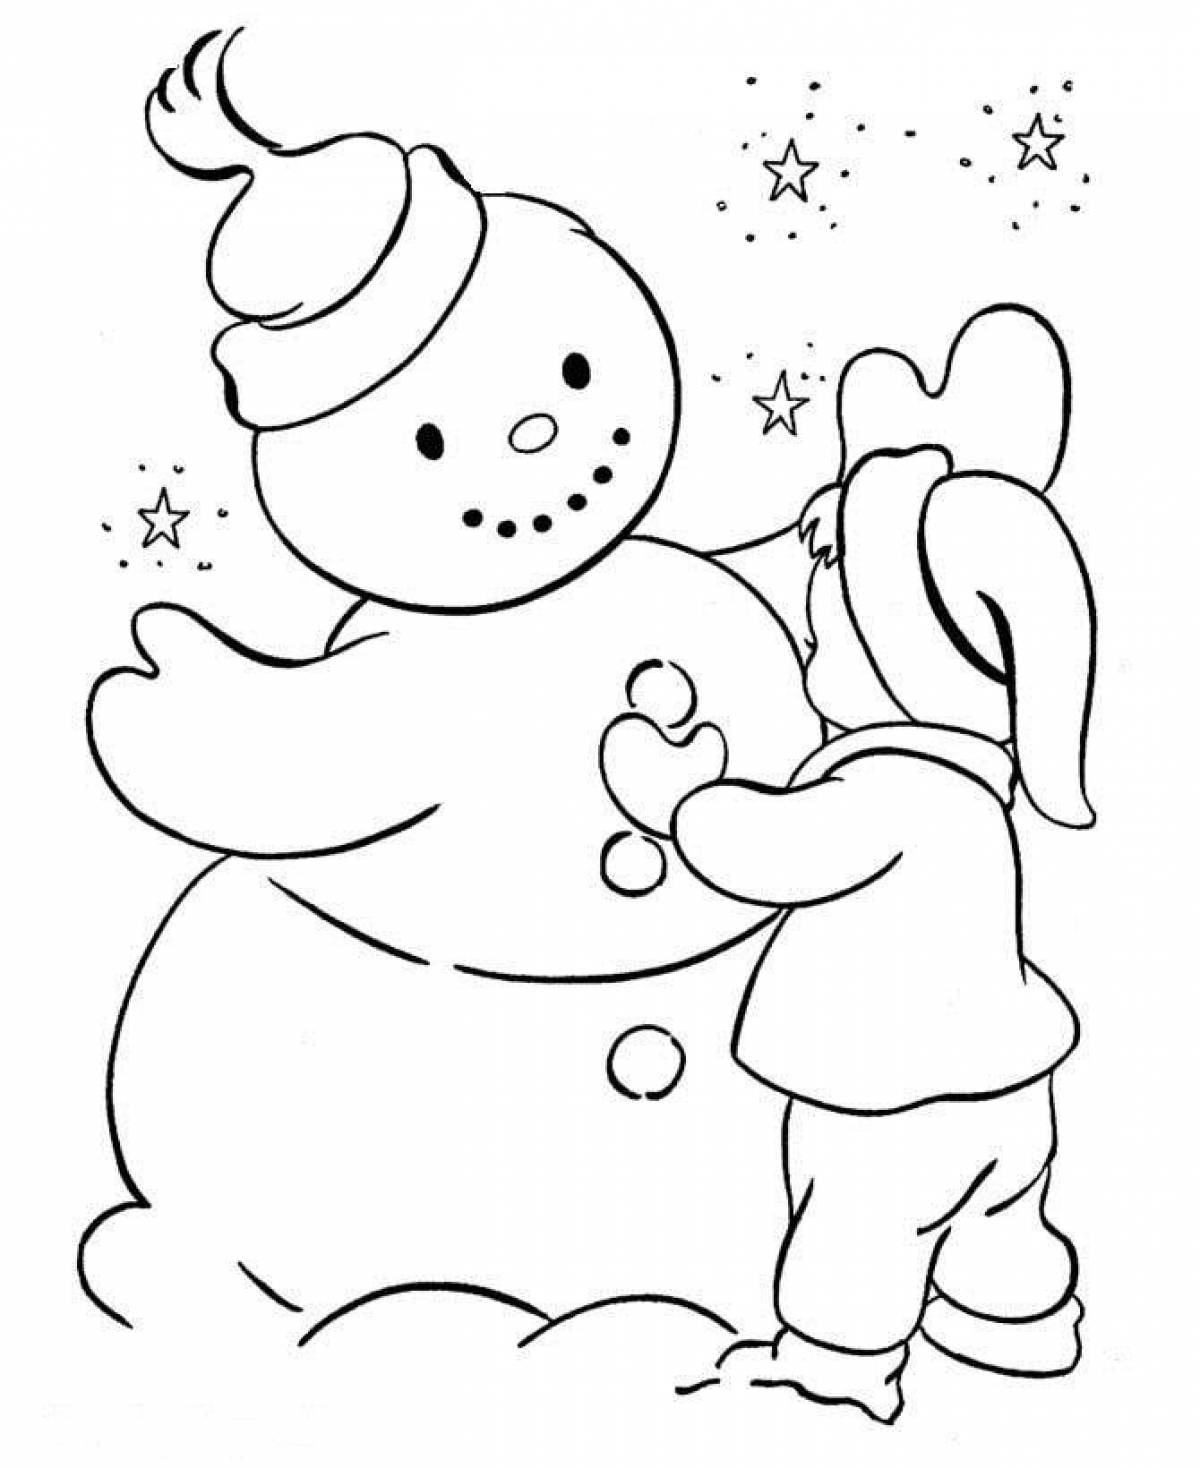 Color-tastic coloring page children make a snowman